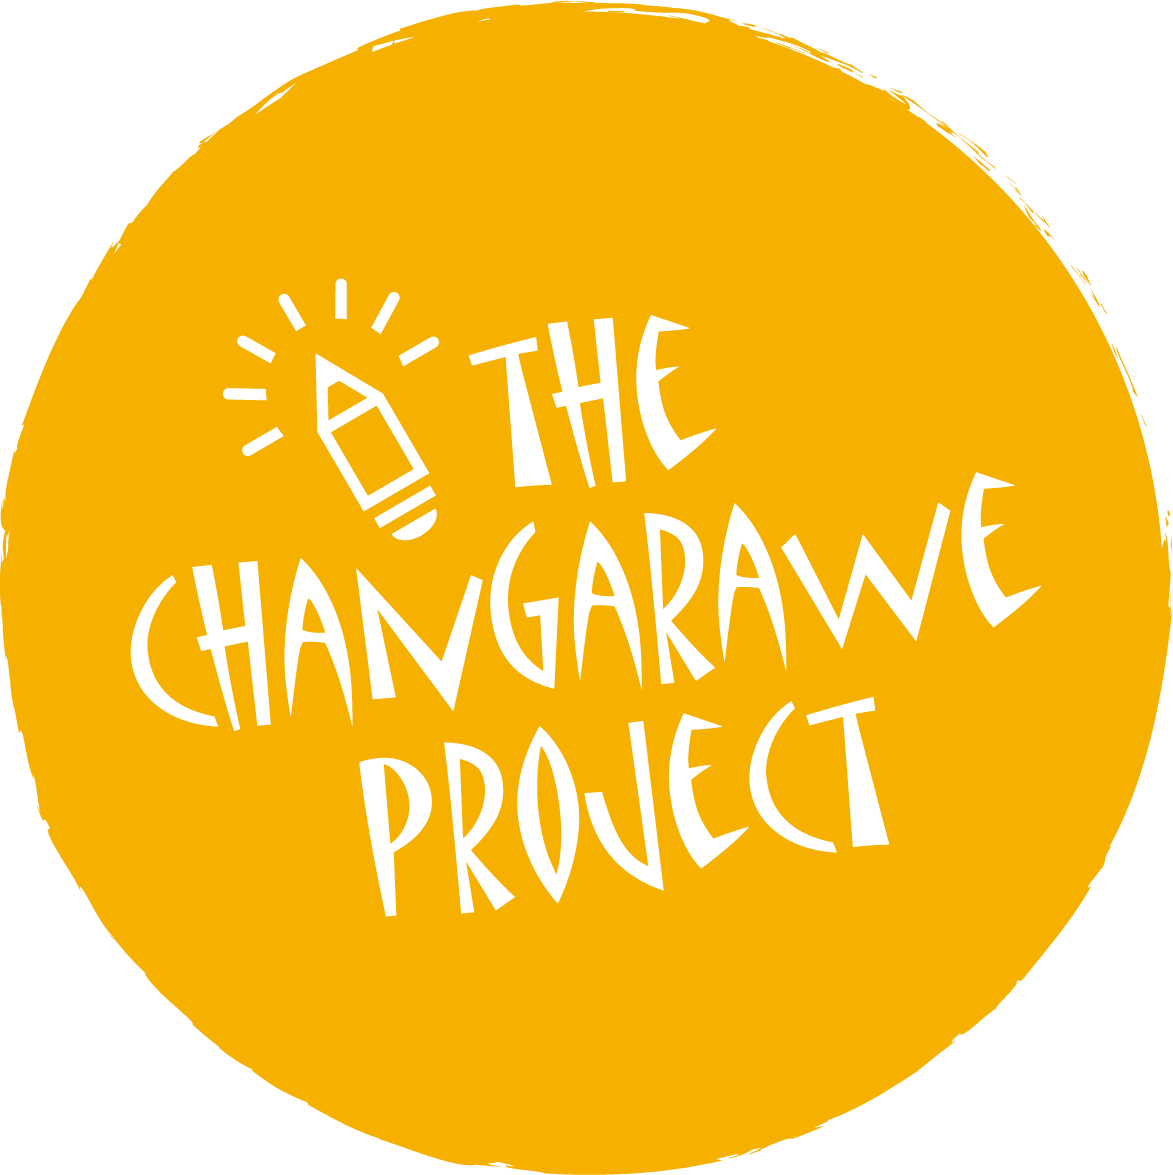 The Changarawe Project